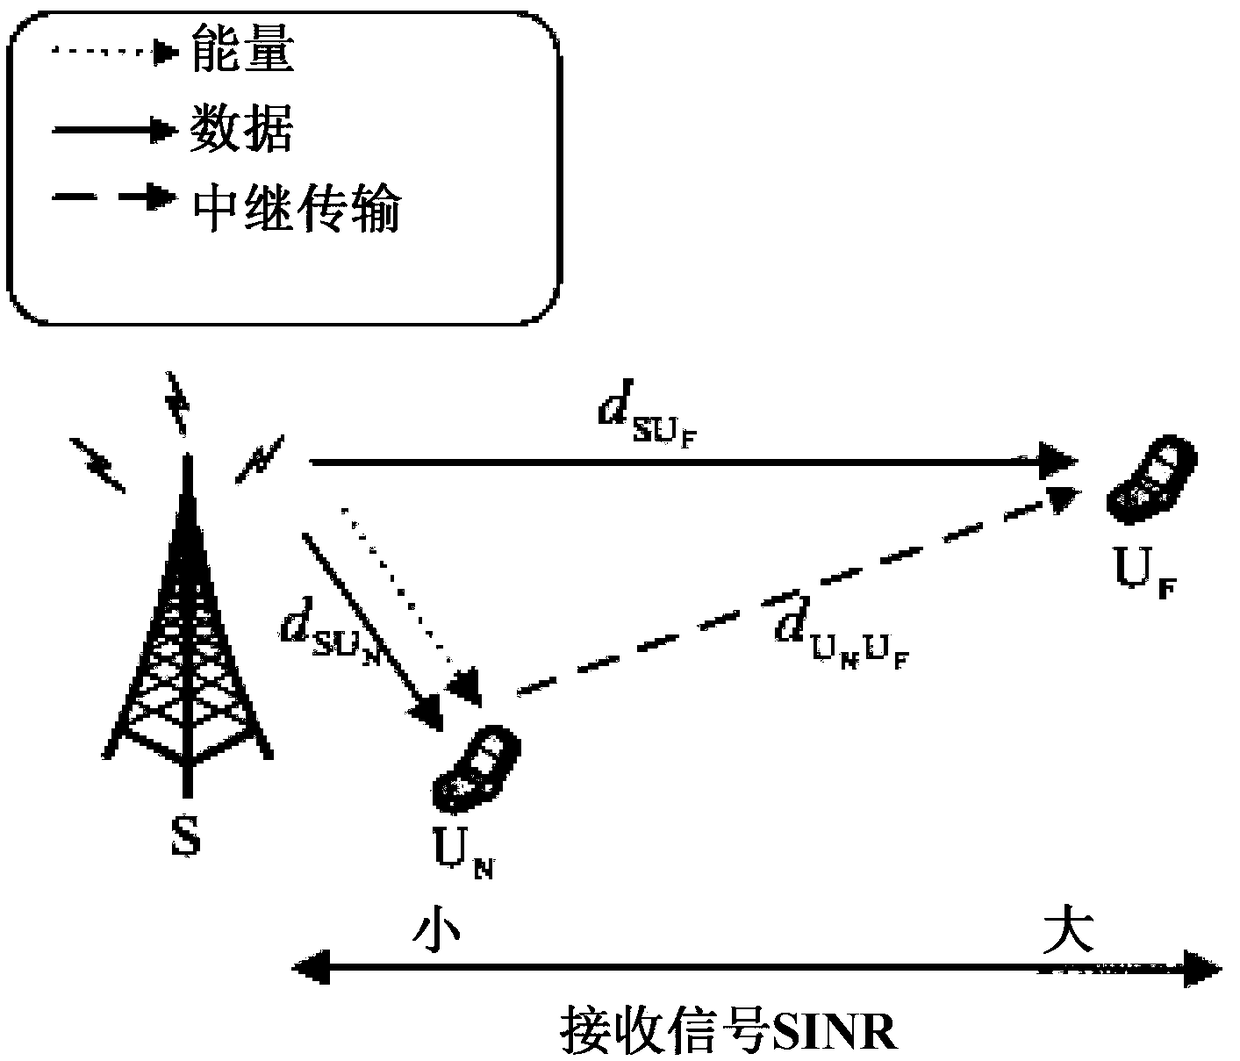 Dynamic-SWIPT-based cooperative transmission method in downlink NOMA communication system